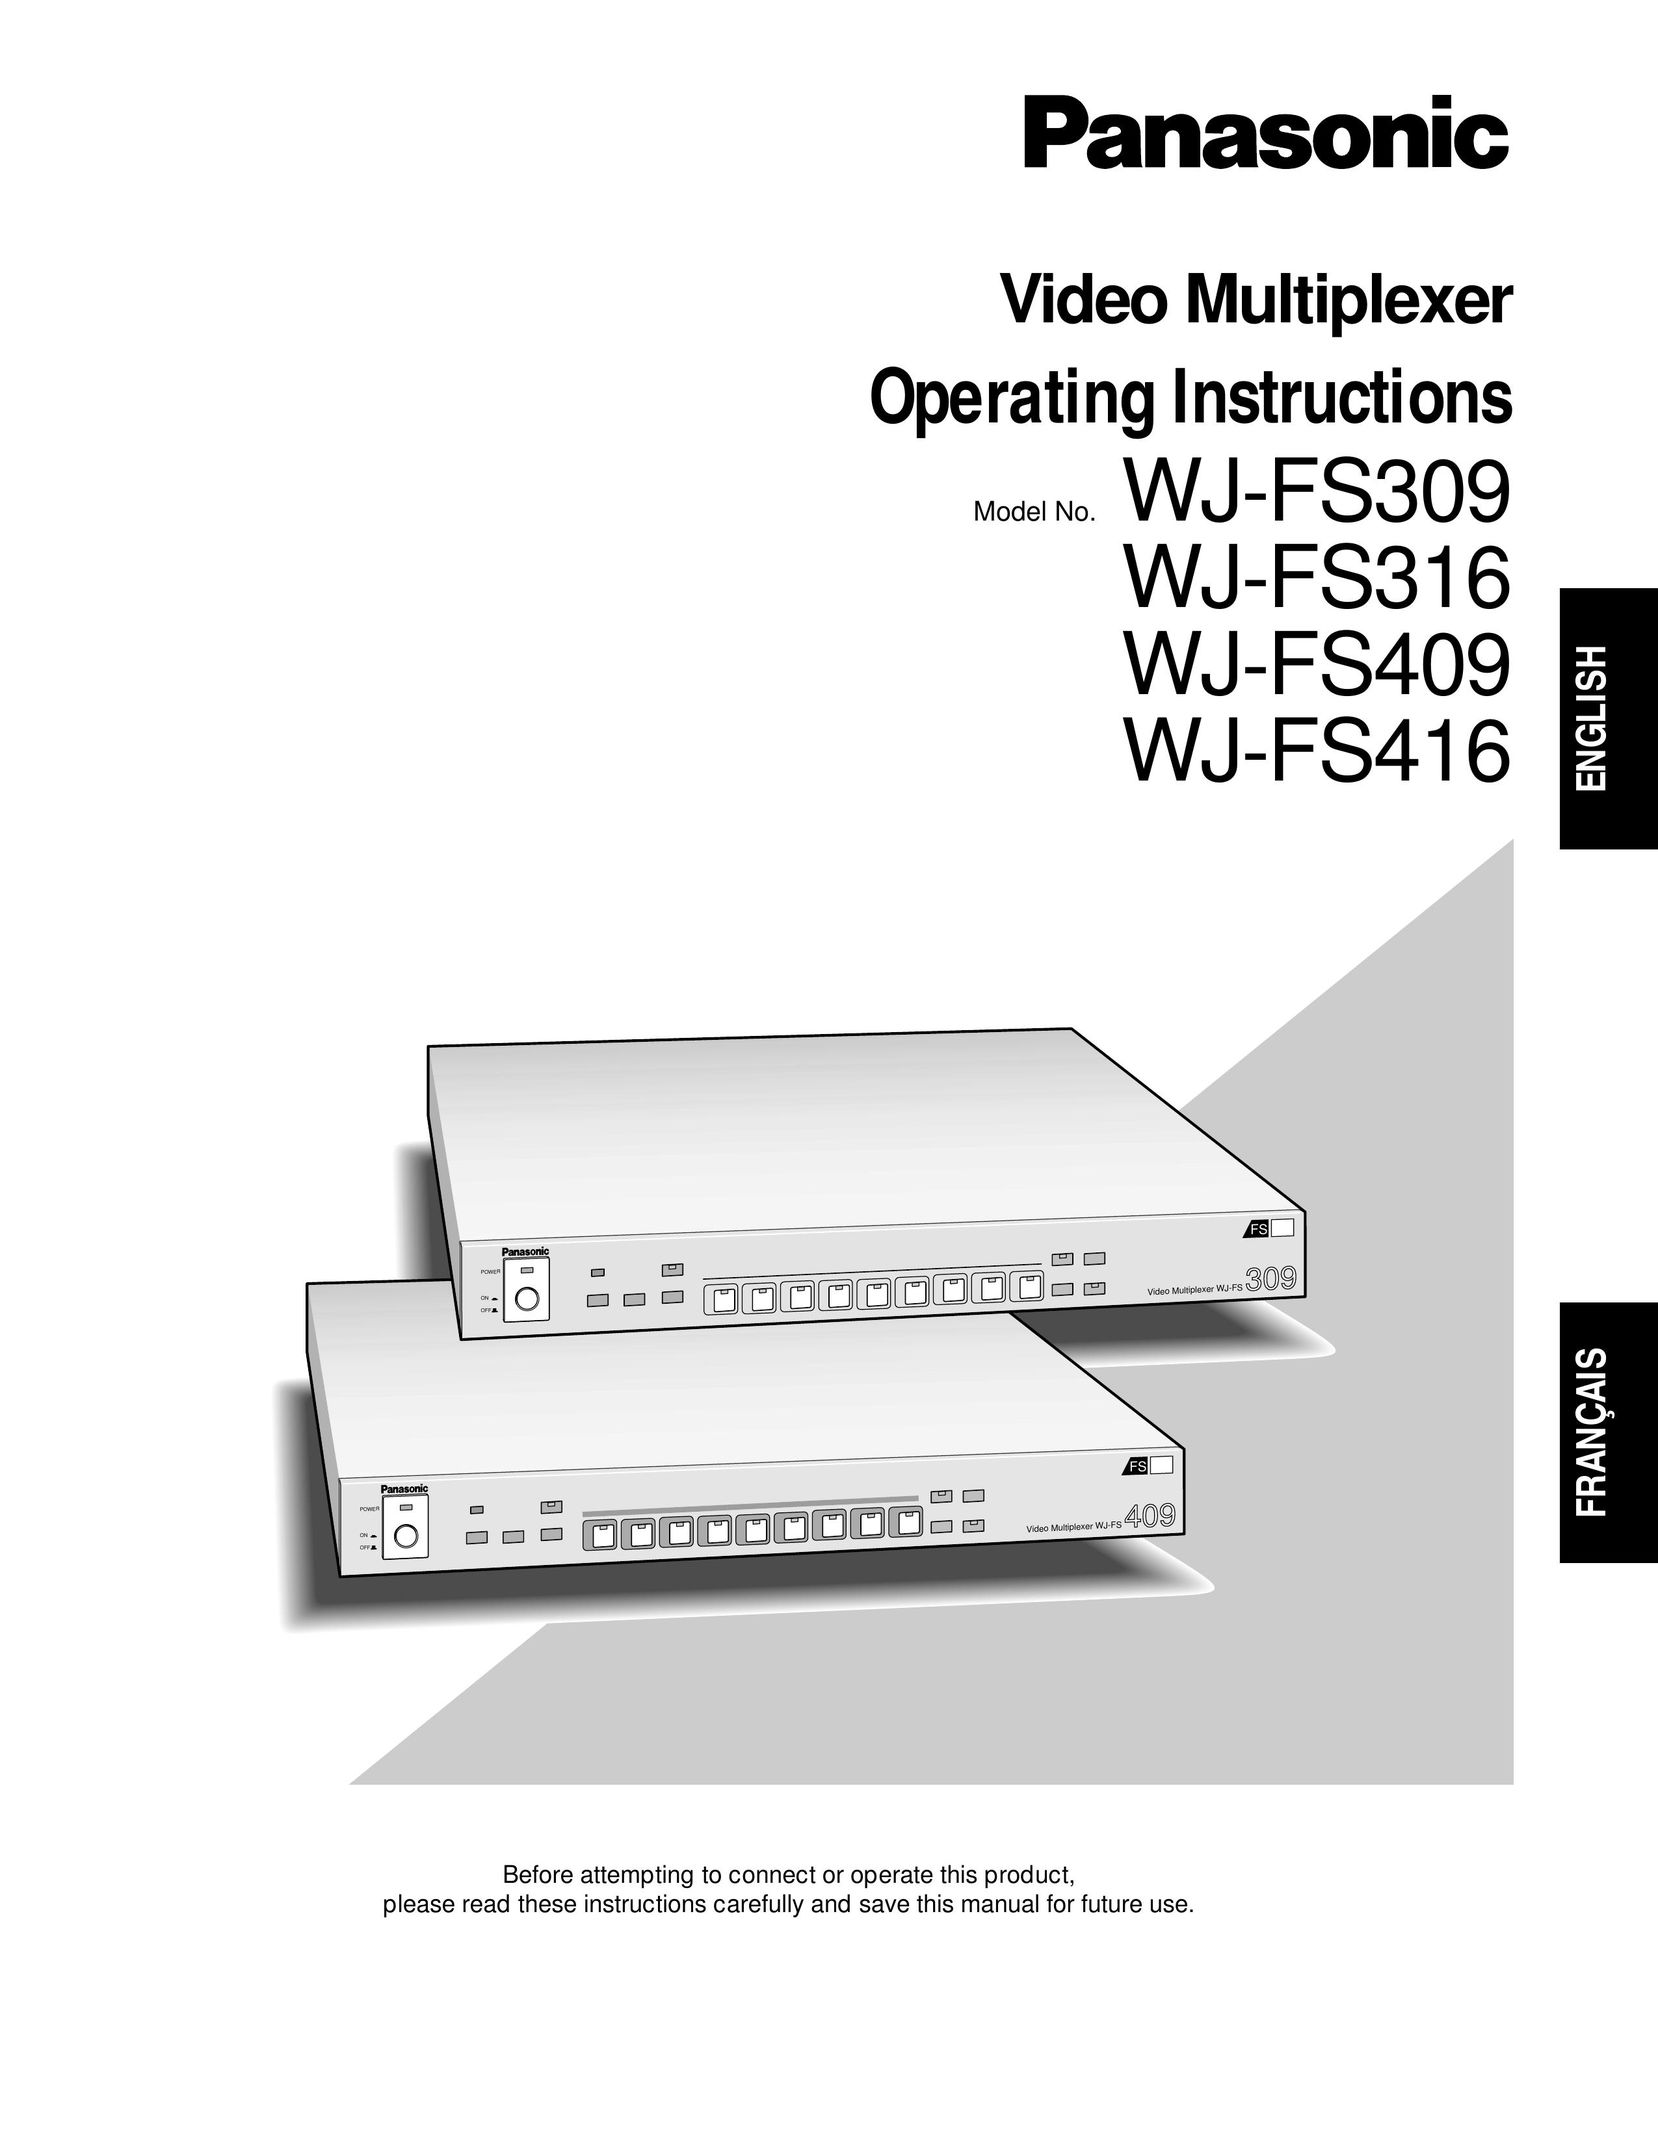 Panasonic WJ-FS309 Home Theater Server User Manual